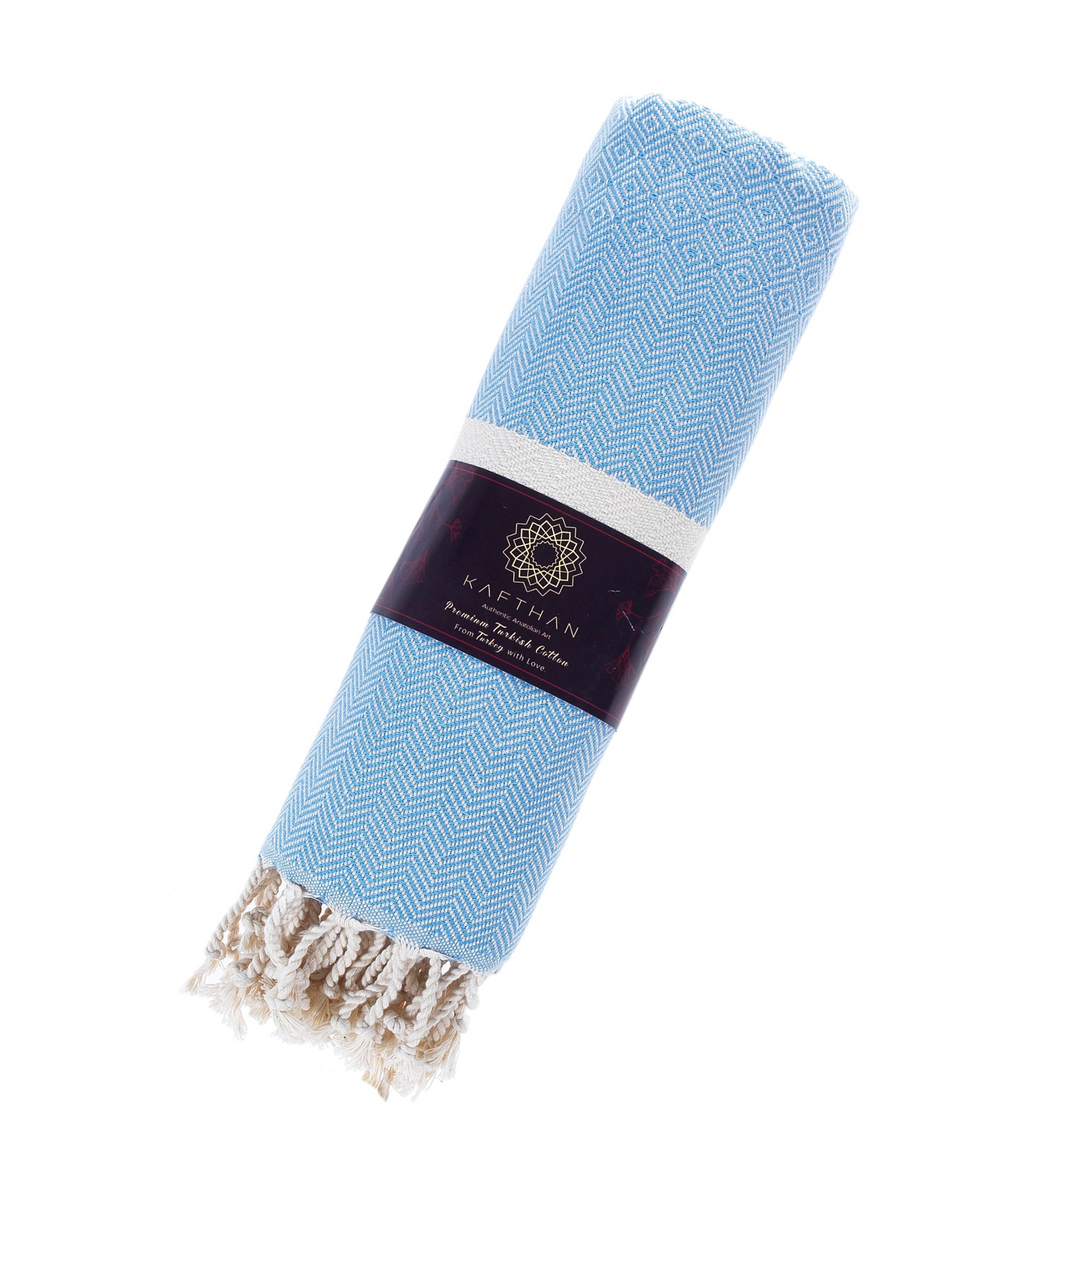 Cross 100% Cotton Turkish Towel: Your Ultimate Bath & Beach Essential